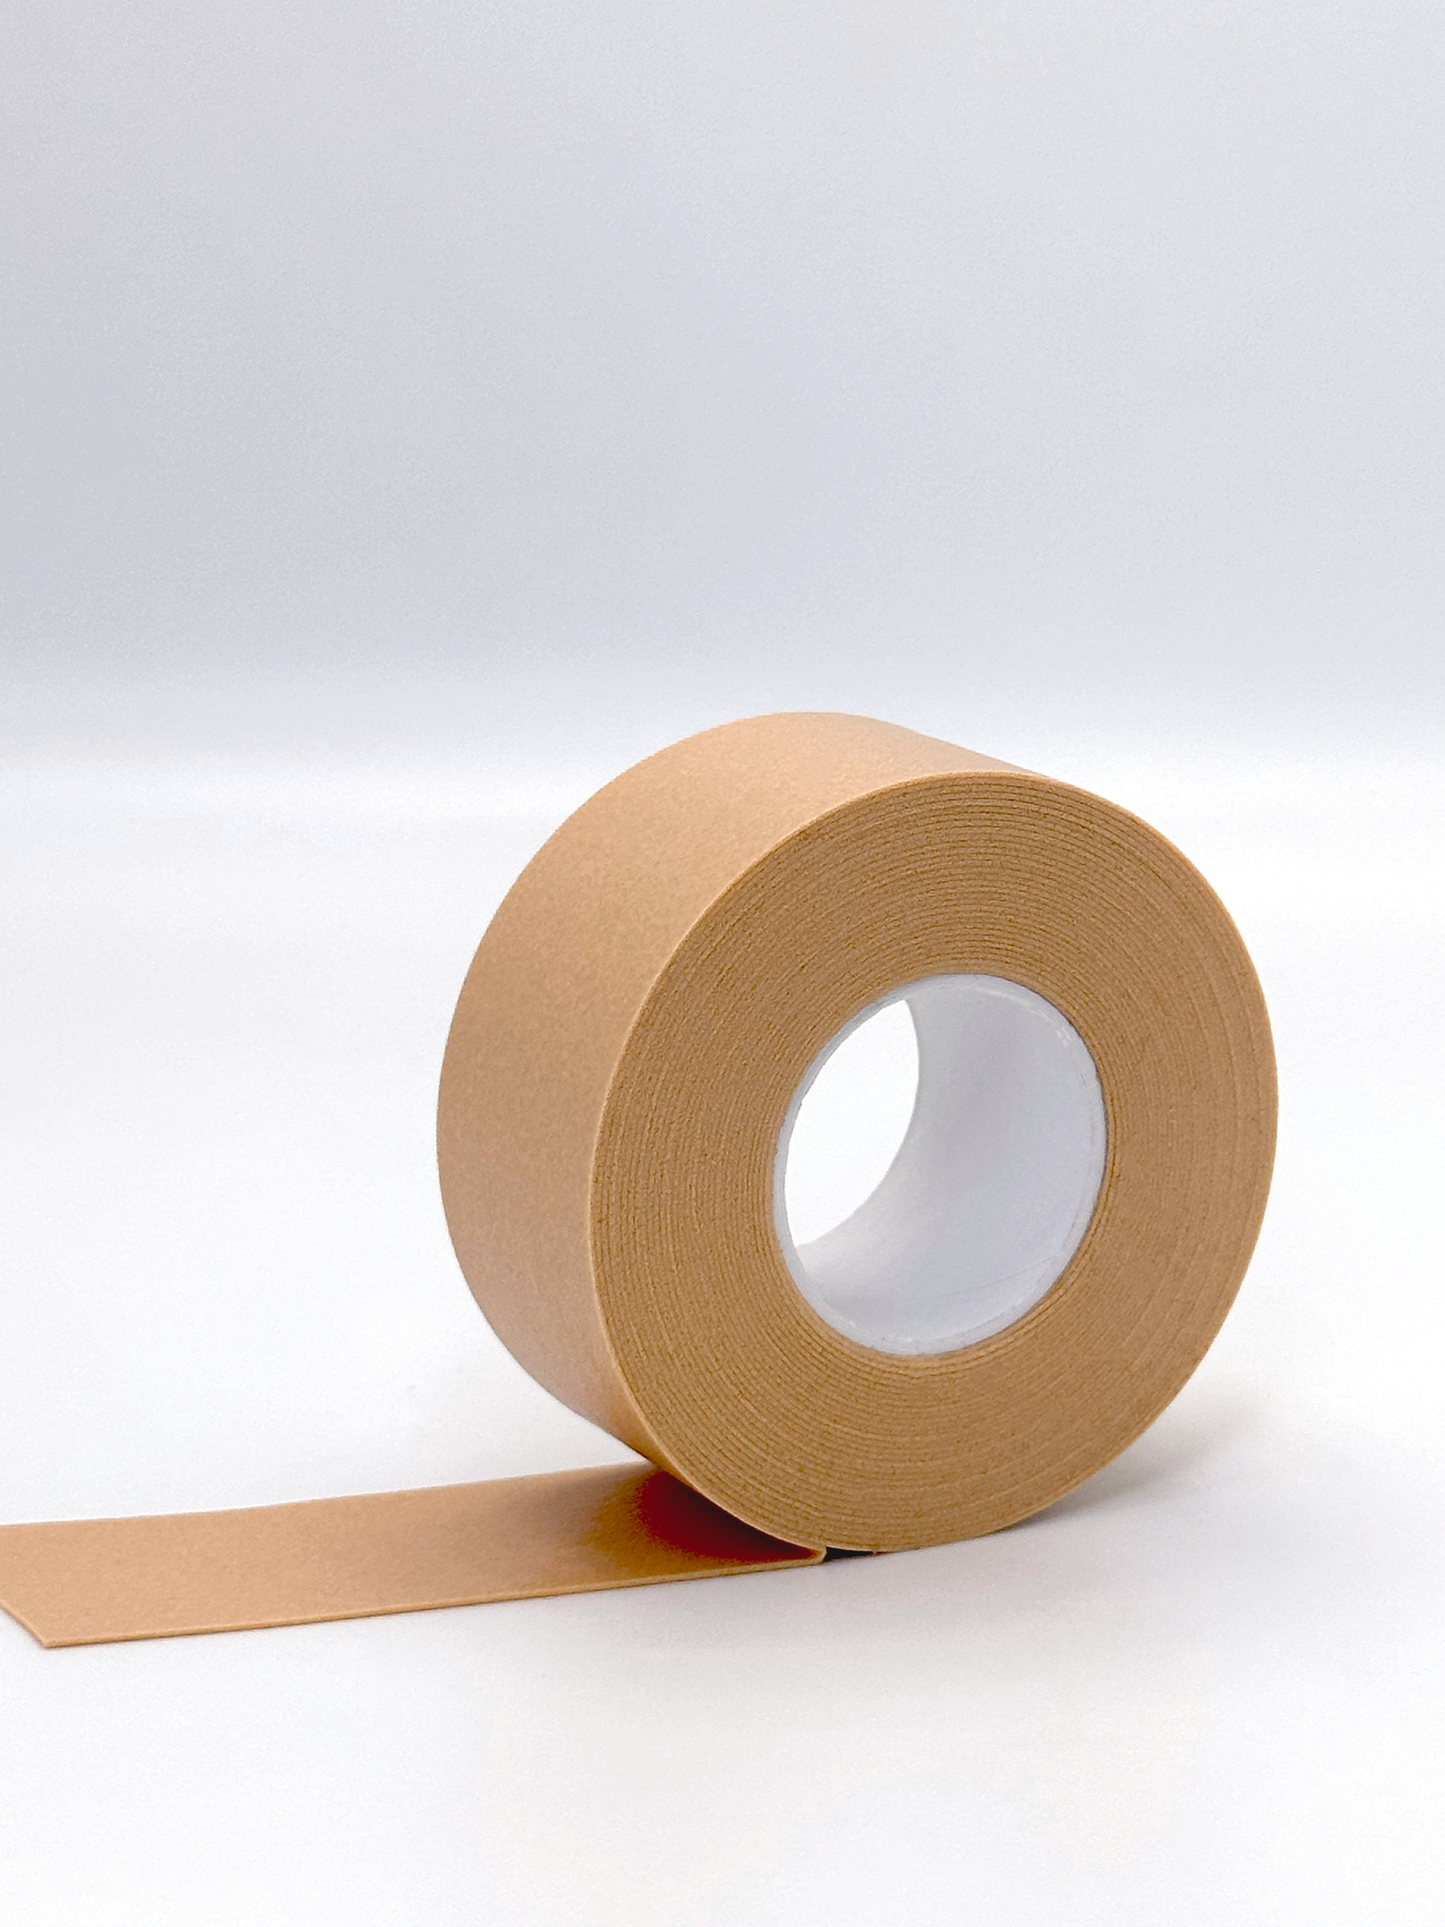 Foam Lash Tape - Breathable & Hypoallergenic Tape for Secure Lash Bonding